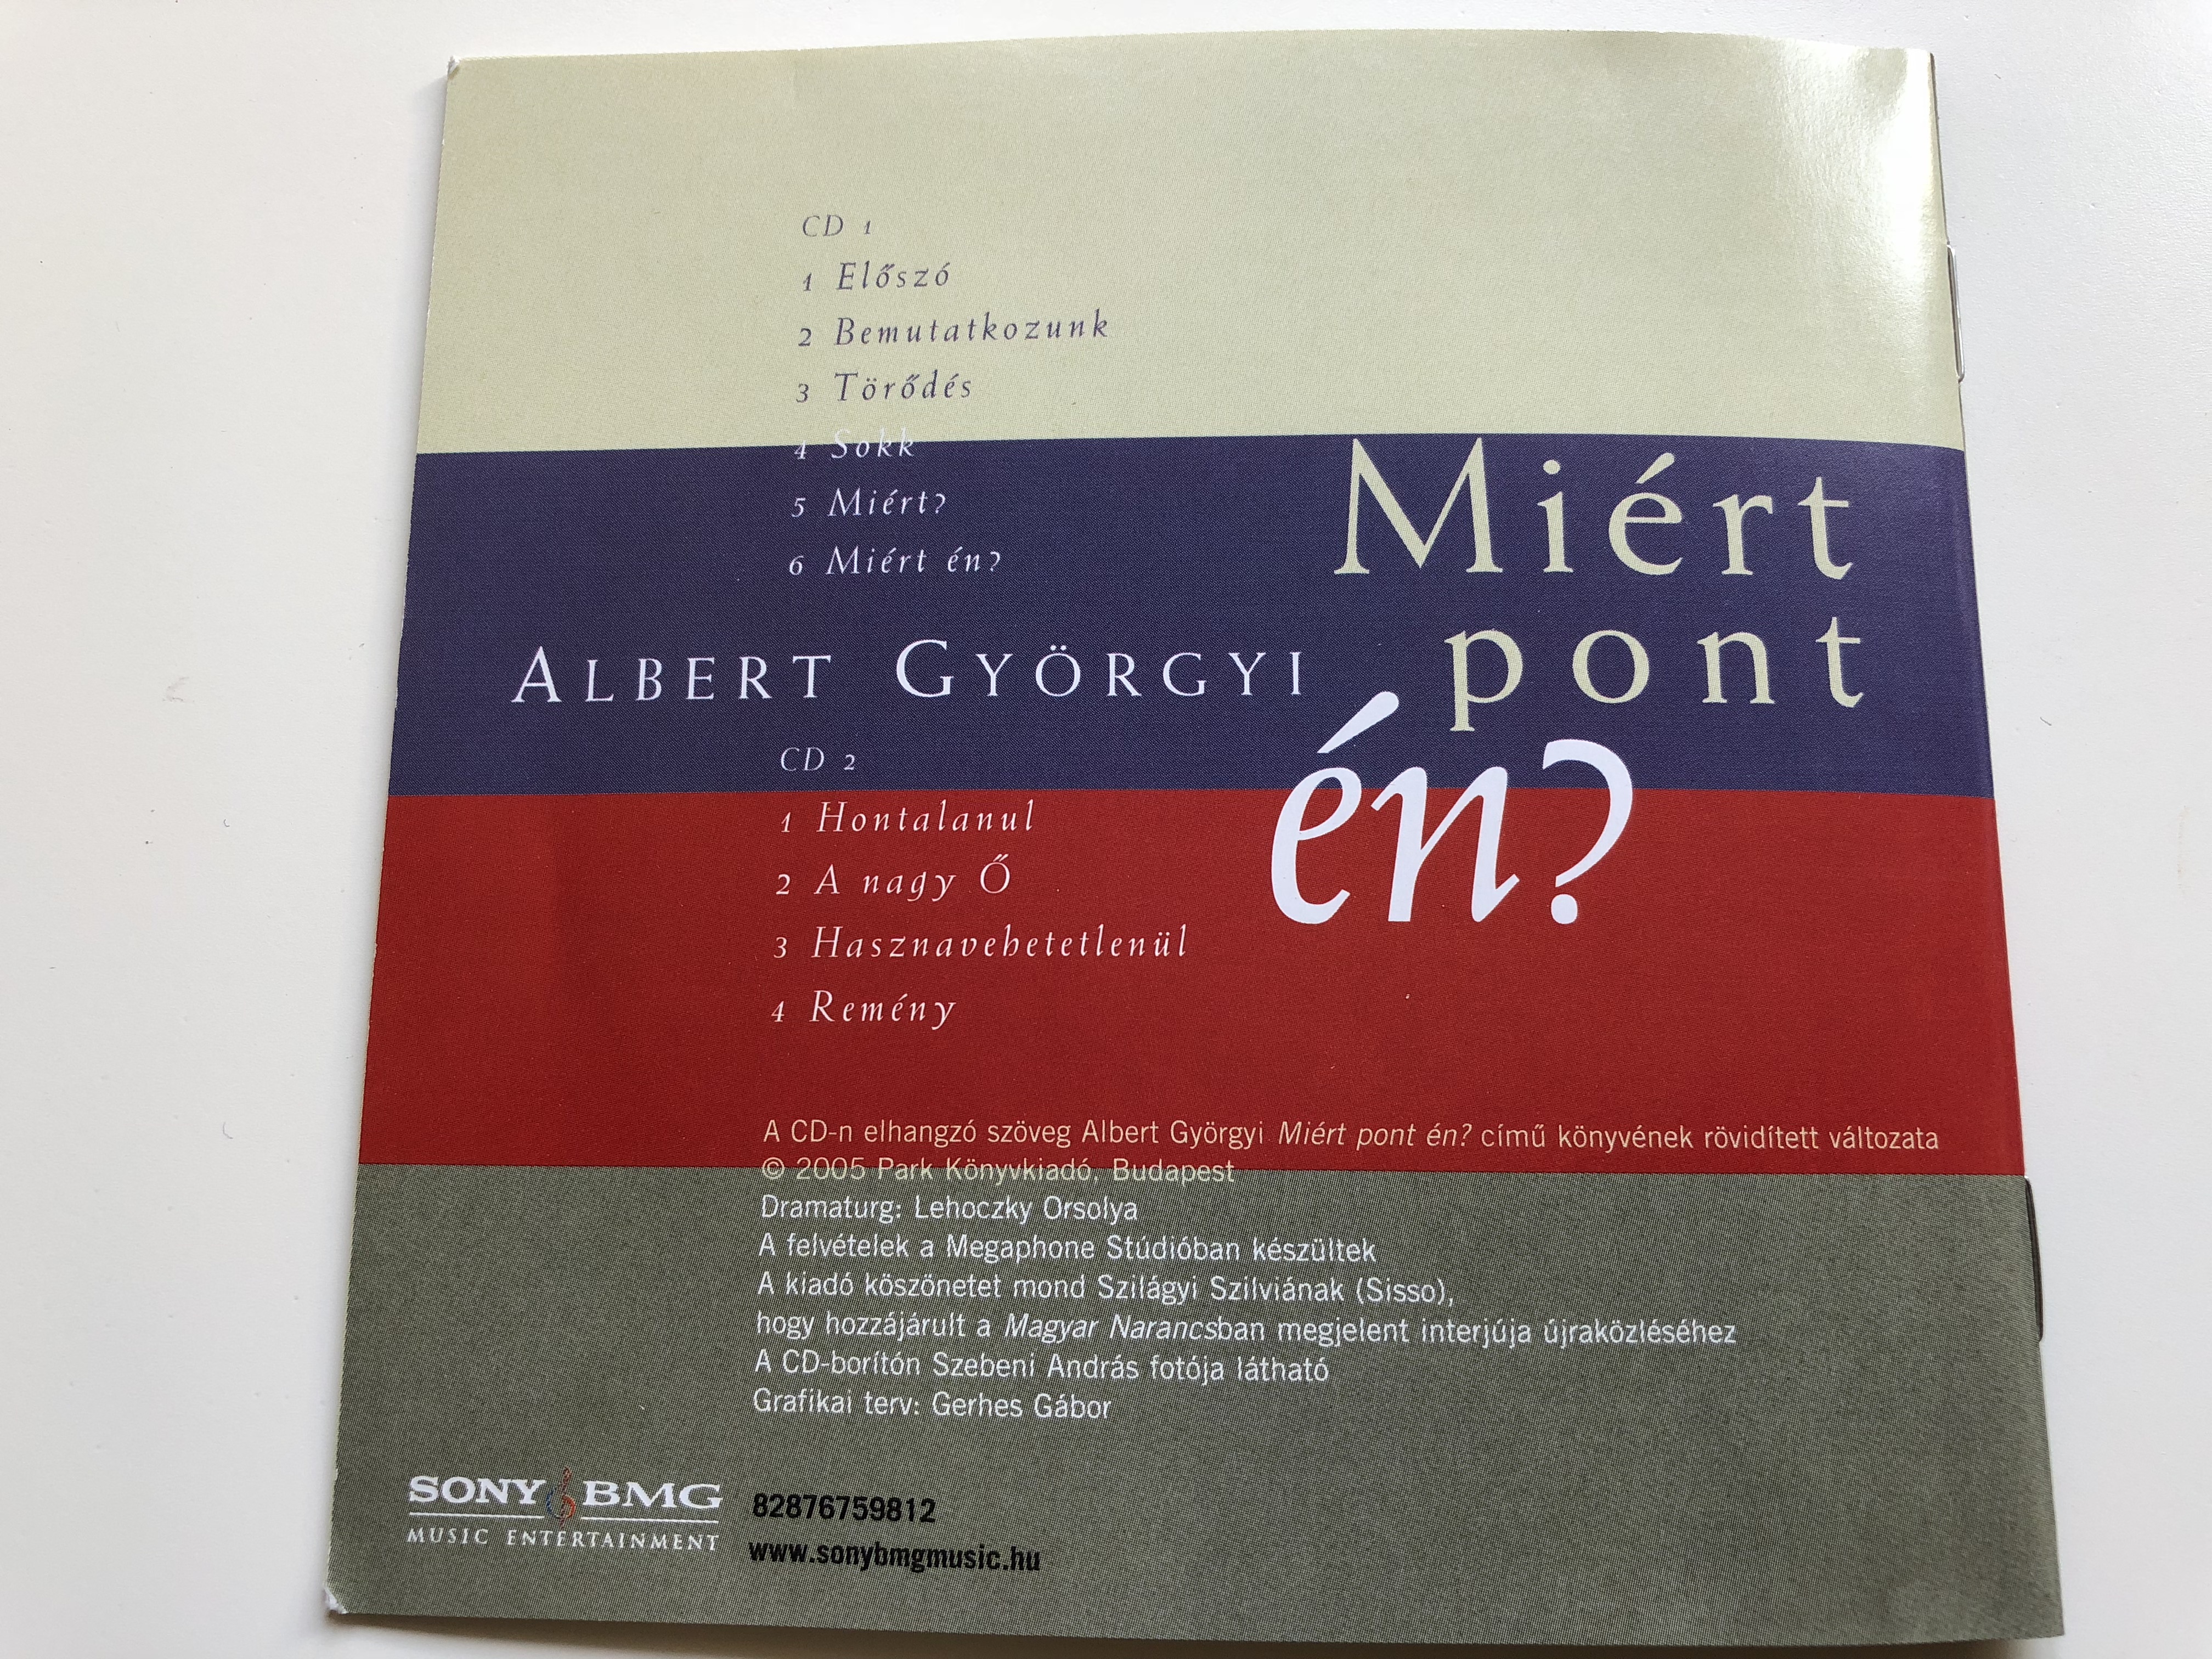 albert-gy-rgyi-mi-rt-pont-n-hangoskonyv-felolvassa-albert-gyorgyi-sony-bmg-music-entertainment-2x-audio-cd-2005-82876759812-7-.jpg